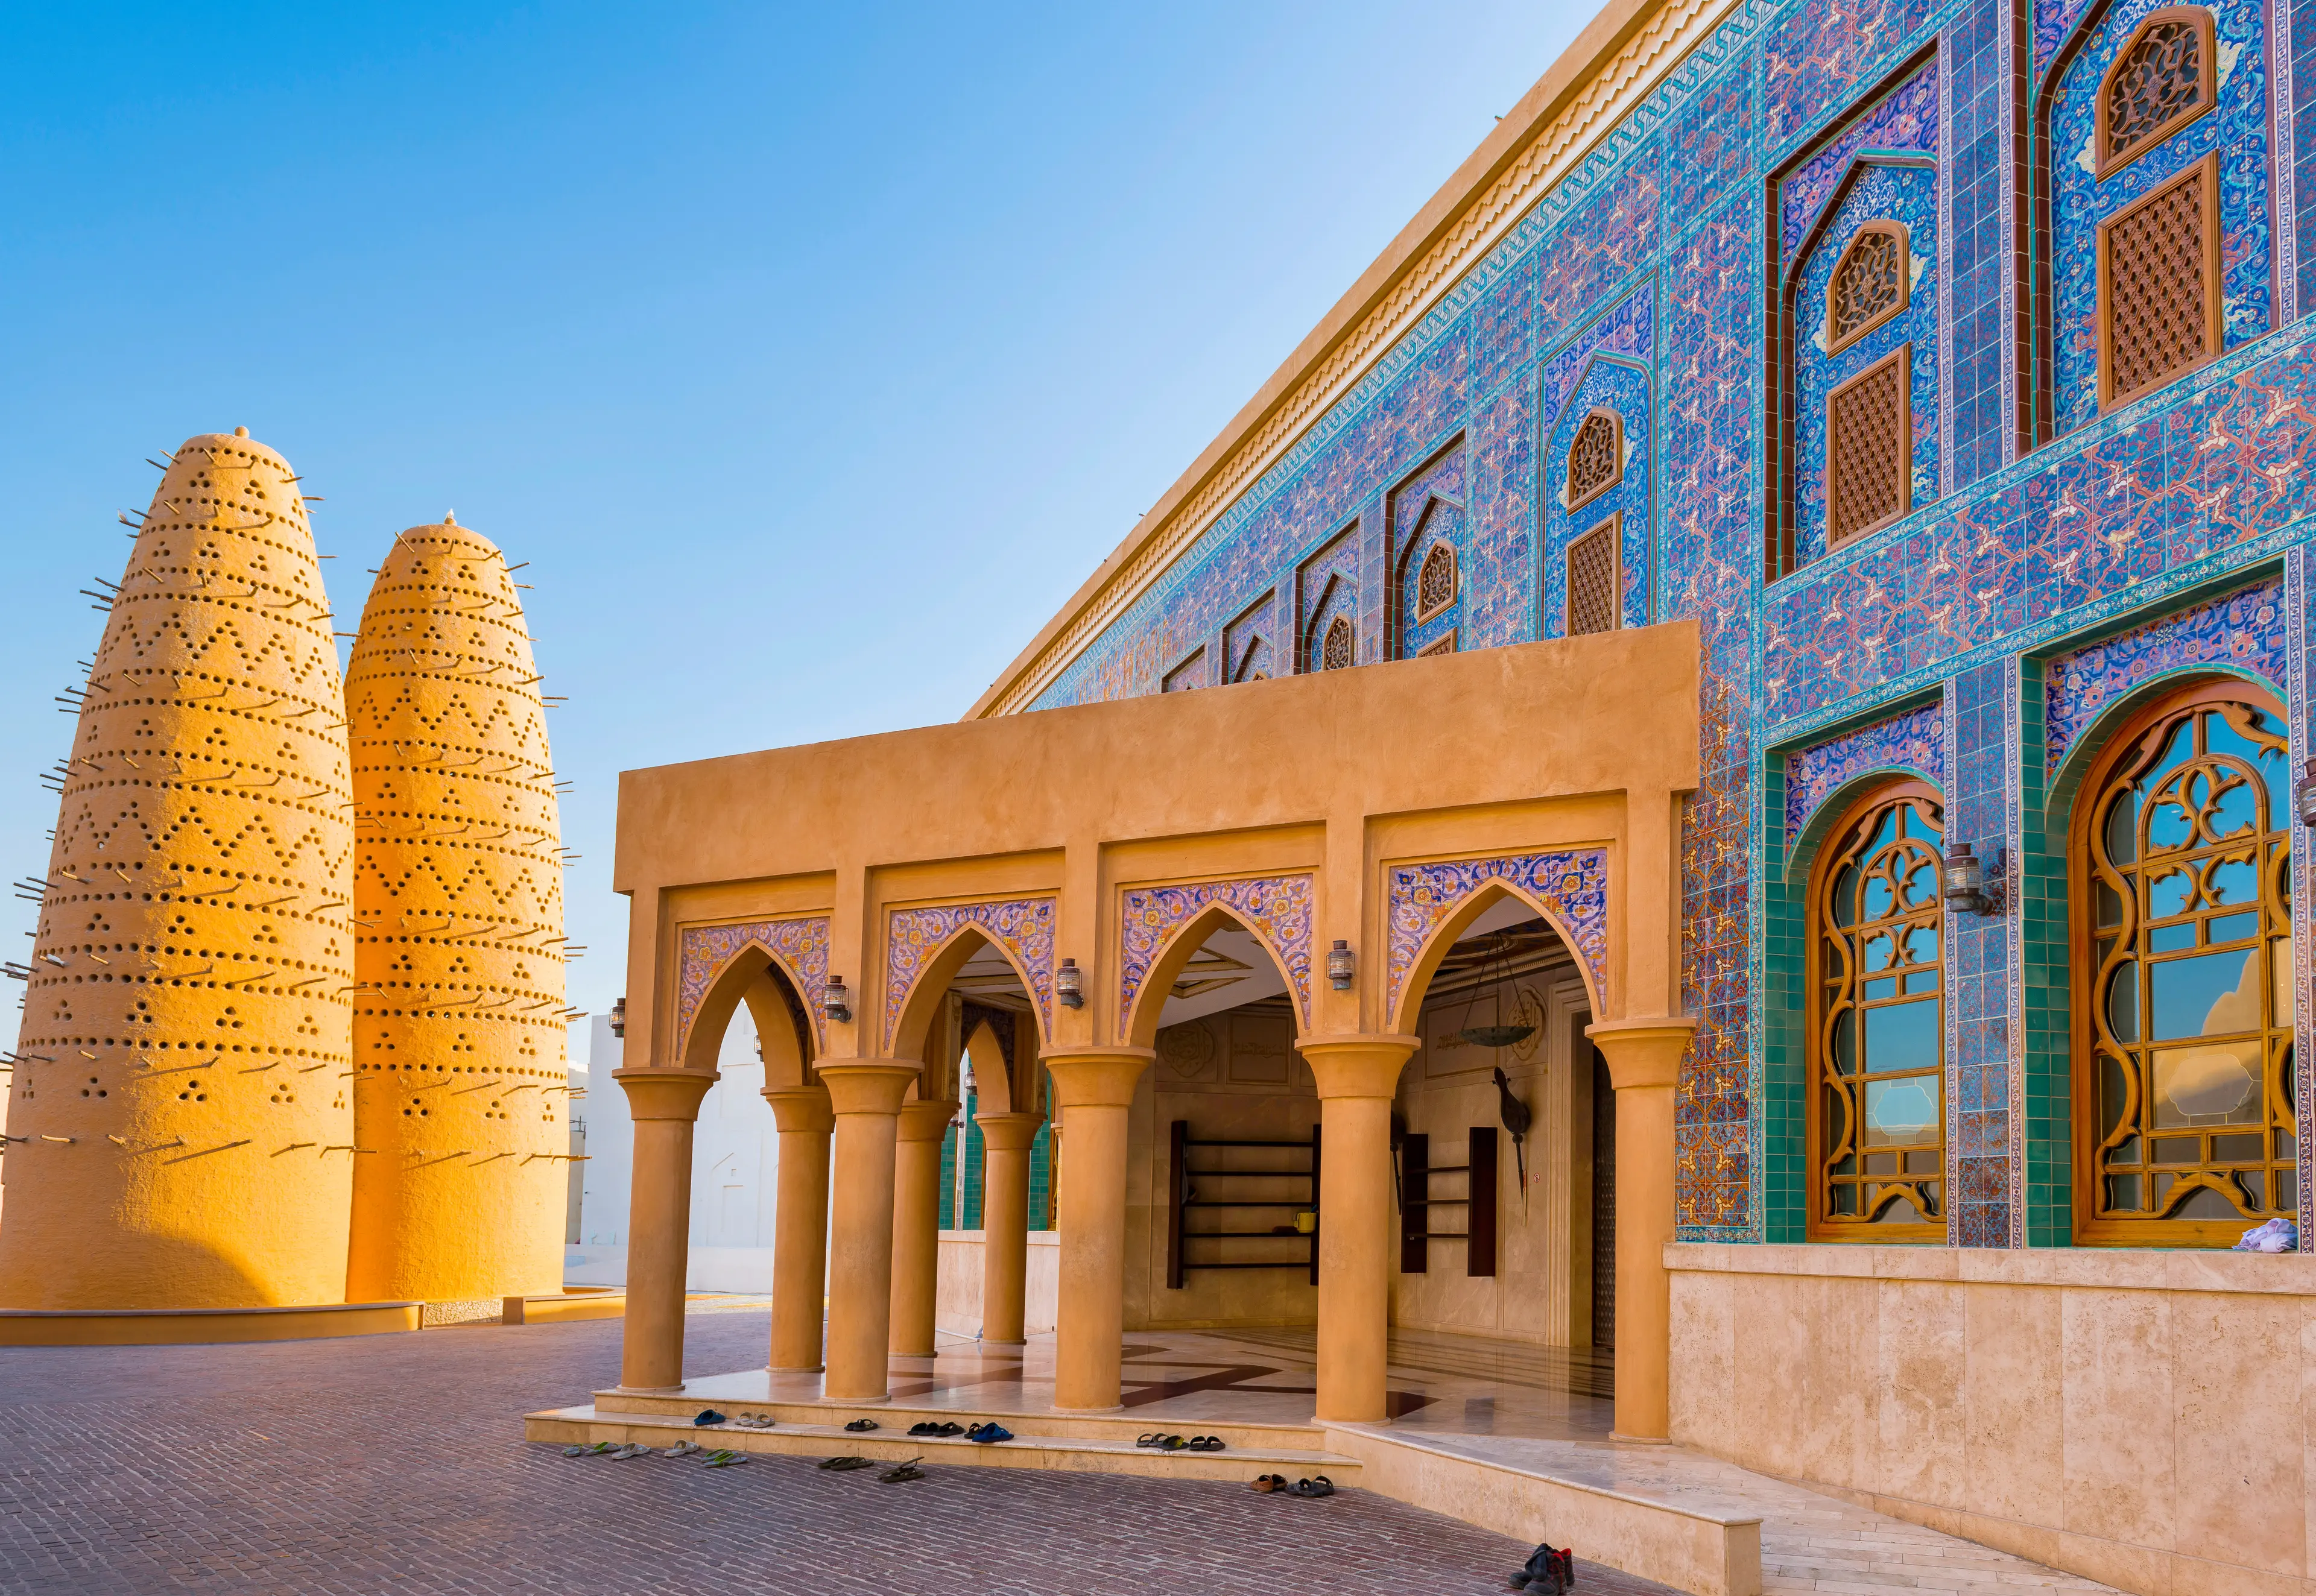 The Katara Mosque in the Cultural Center